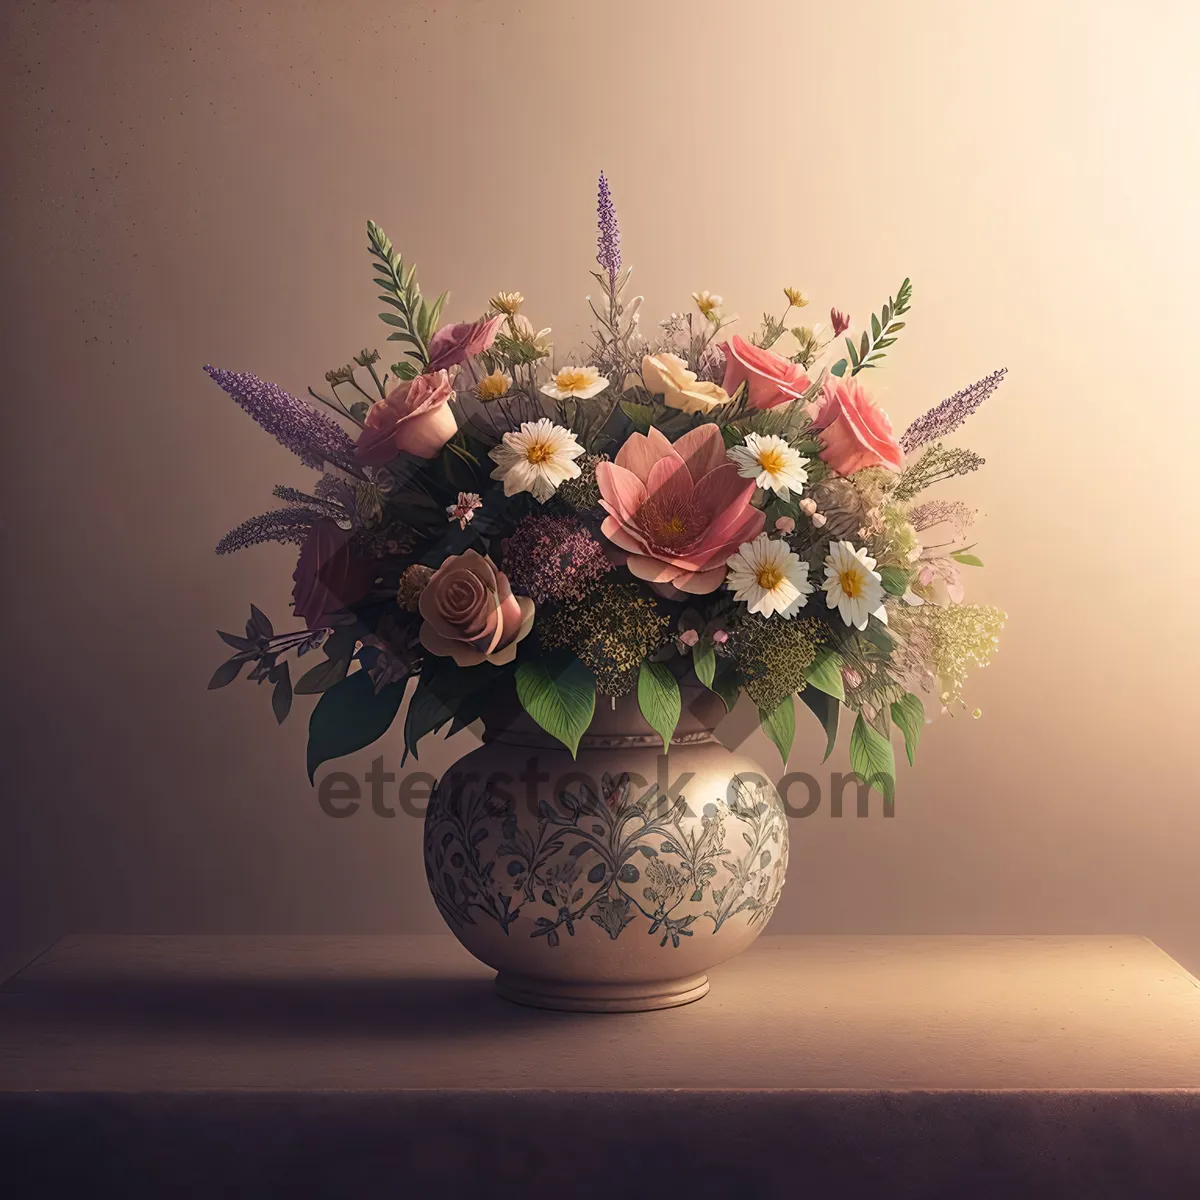 Picture of Festive Winter Floral Vase Decoration